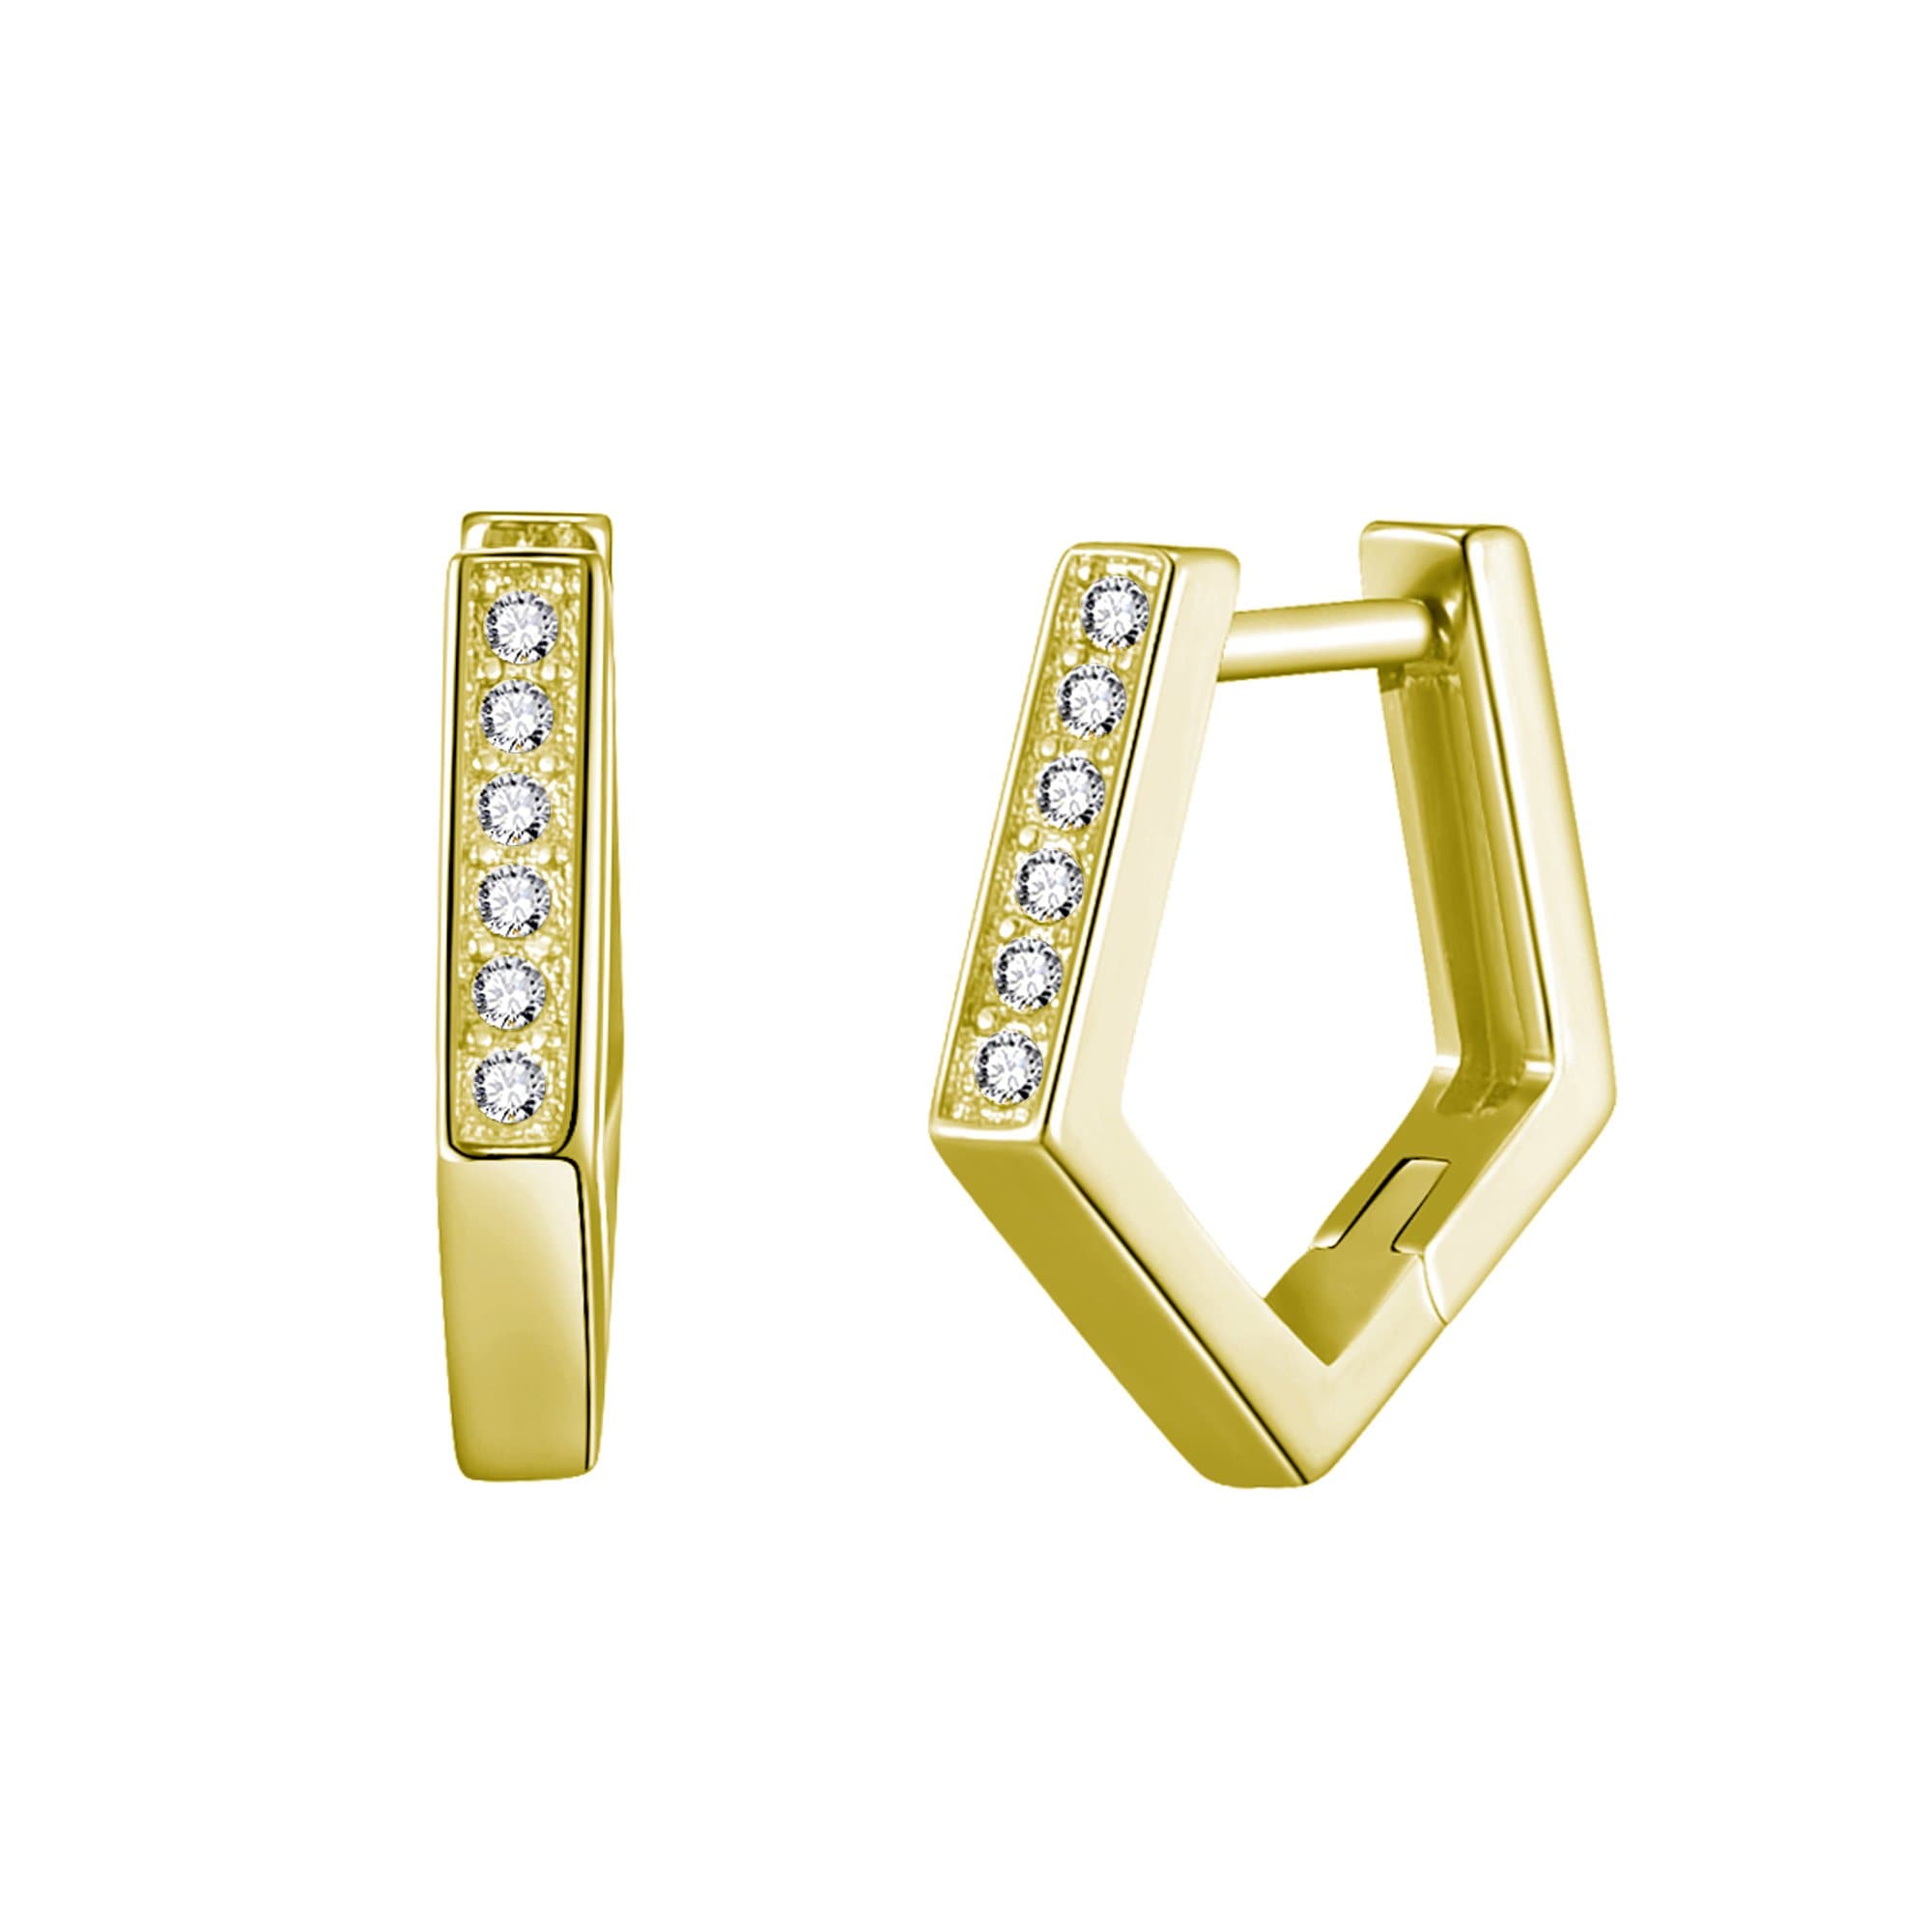 Gold Plated Geometric Hoop Earrings Created with Zircondia® Crystals by Philip Jones Jewellery